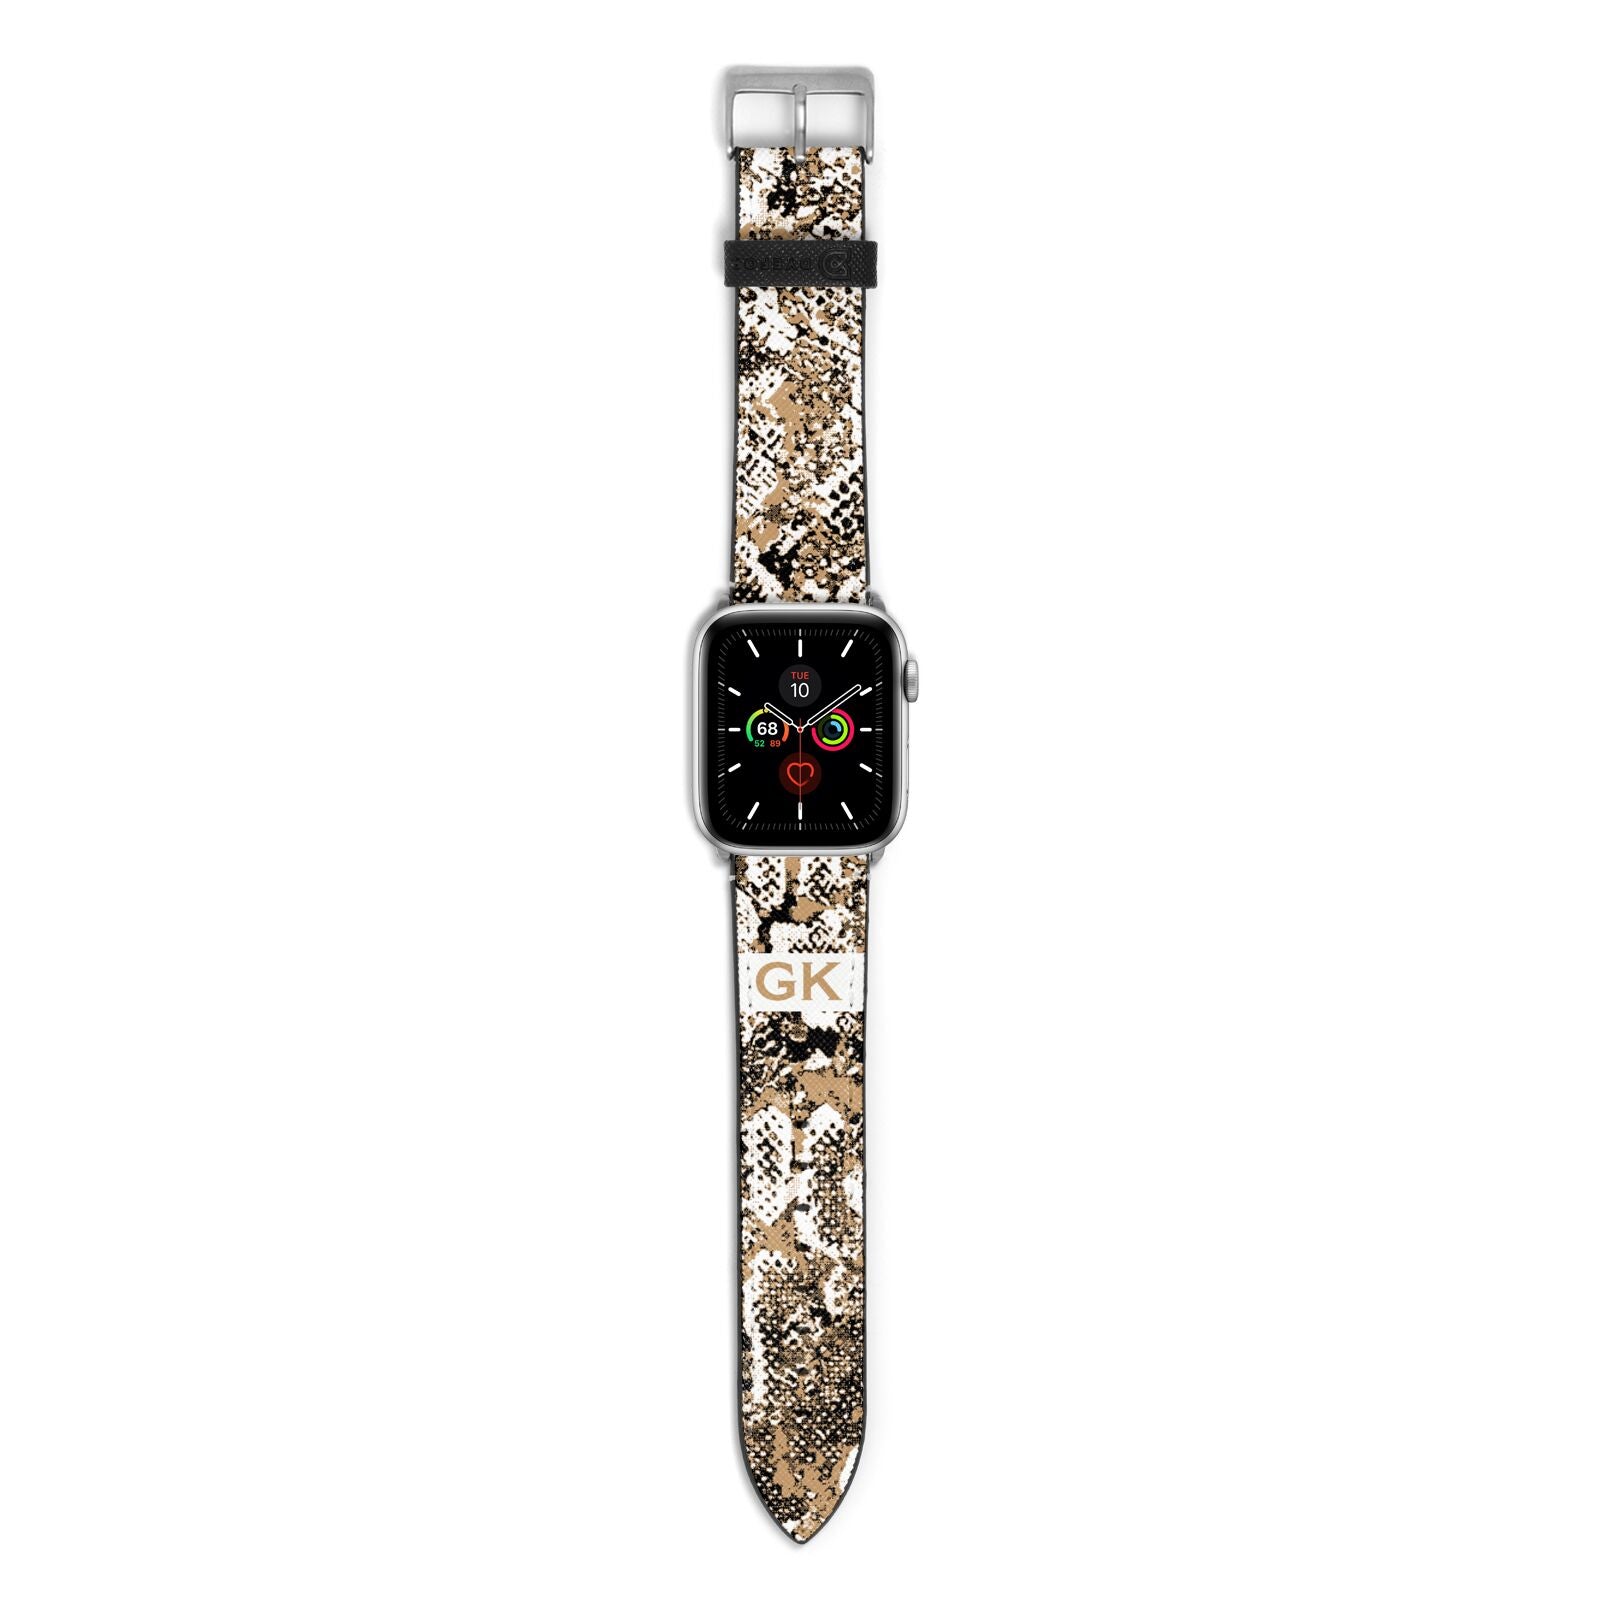 Custom Tan Snakeskin Apple Watch Strap with Silver Hardware